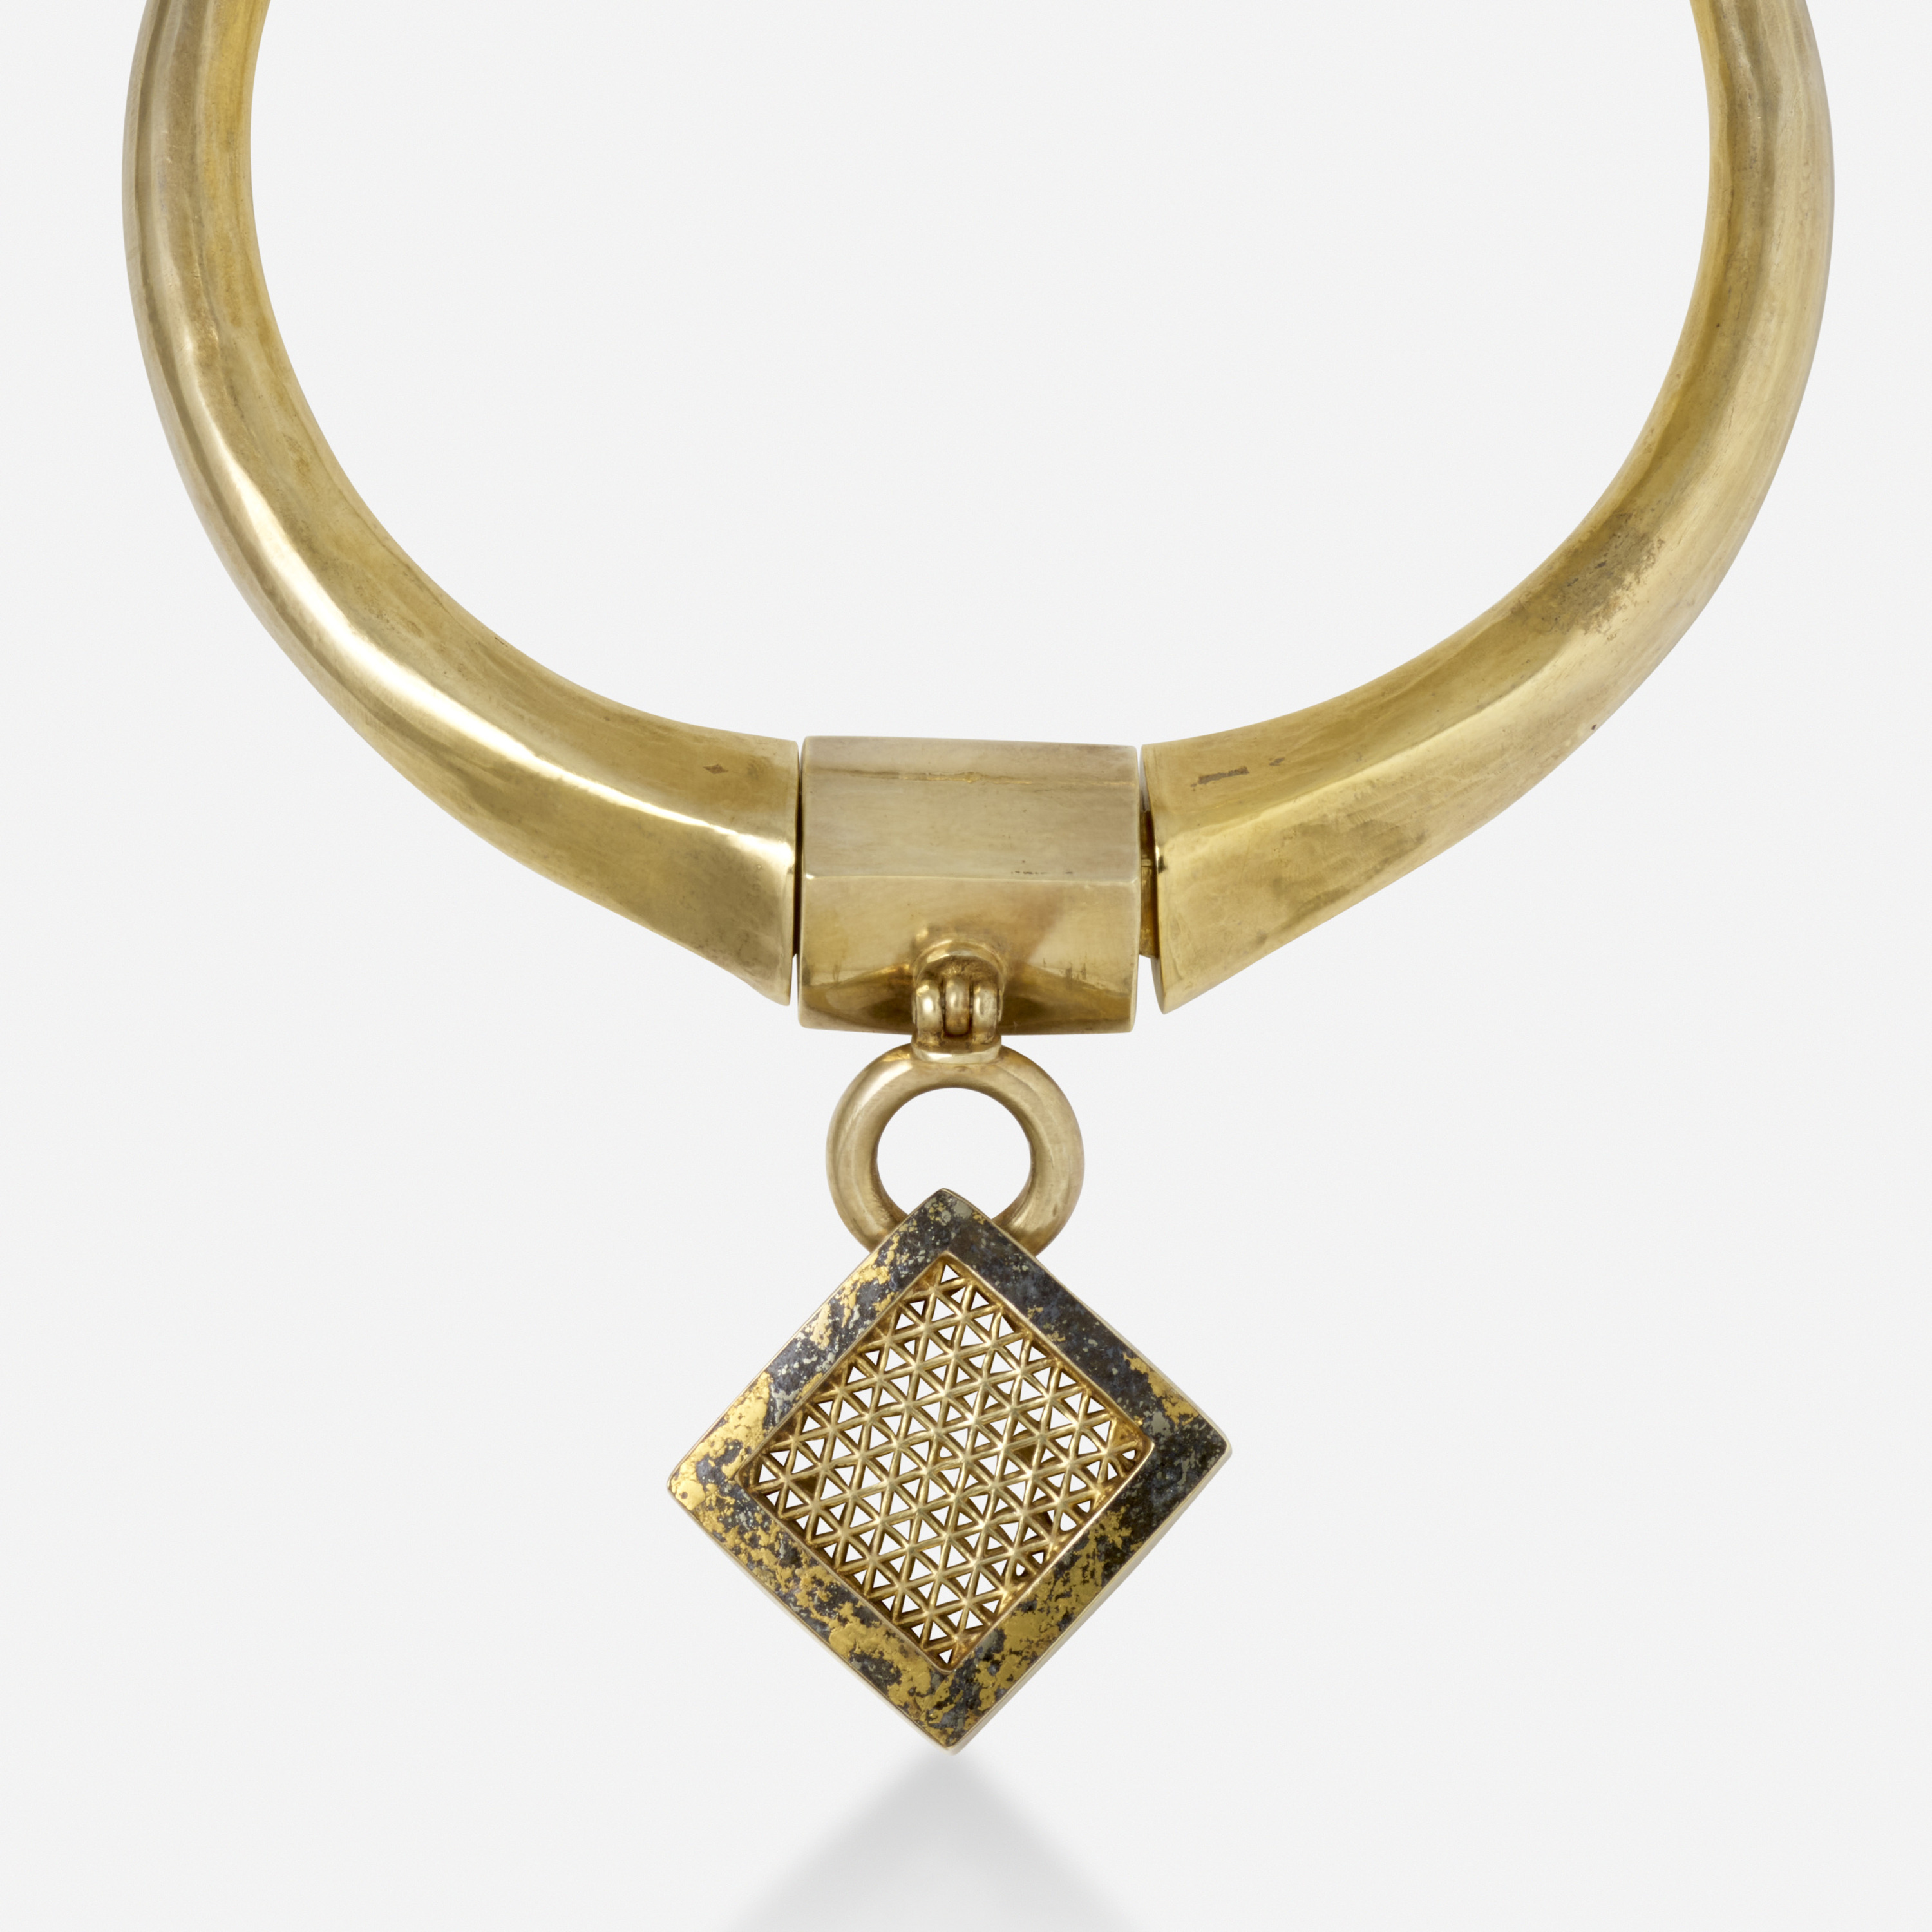 Goudji silver gilt torque necklace, est. $4,000-$6,000. Image courtesy of Rago/Wright/LAMA